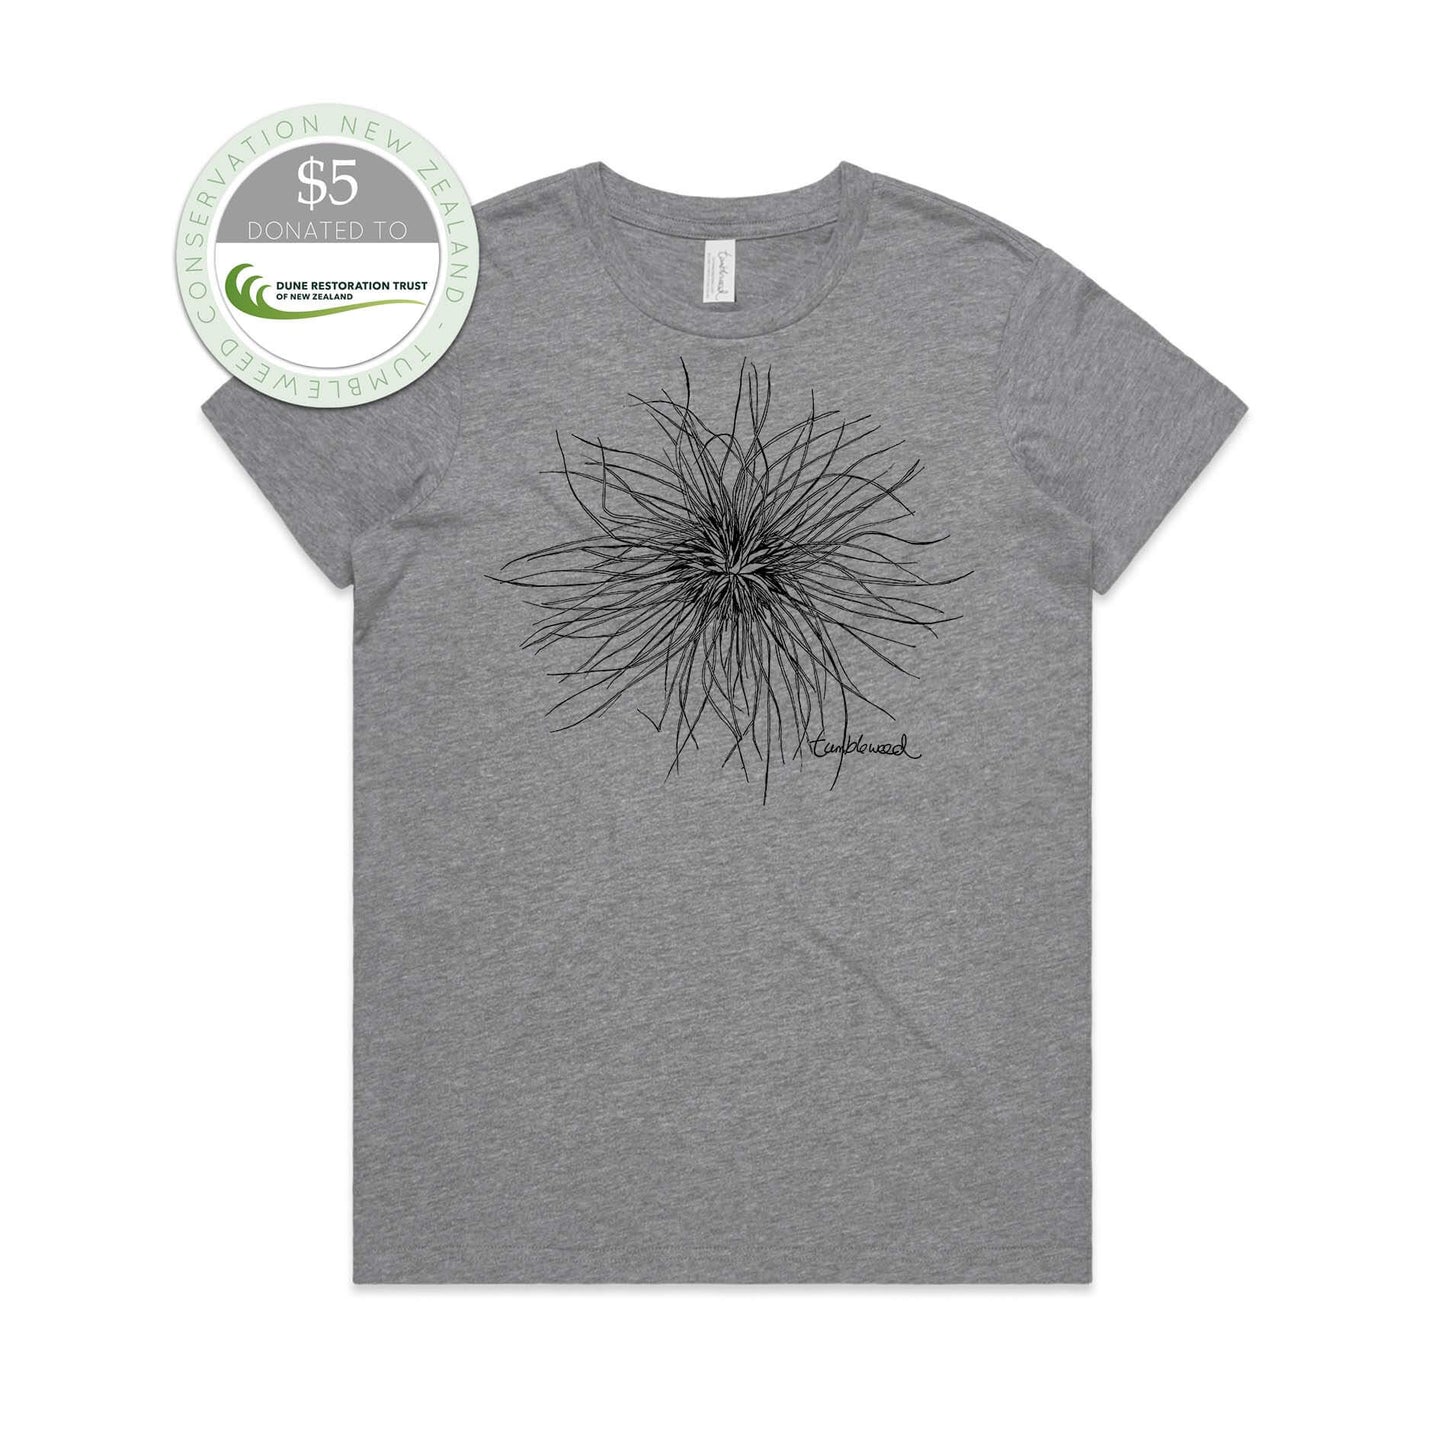 Grey marle, female t-shirt featuring a screen printed Tumbleweed design.